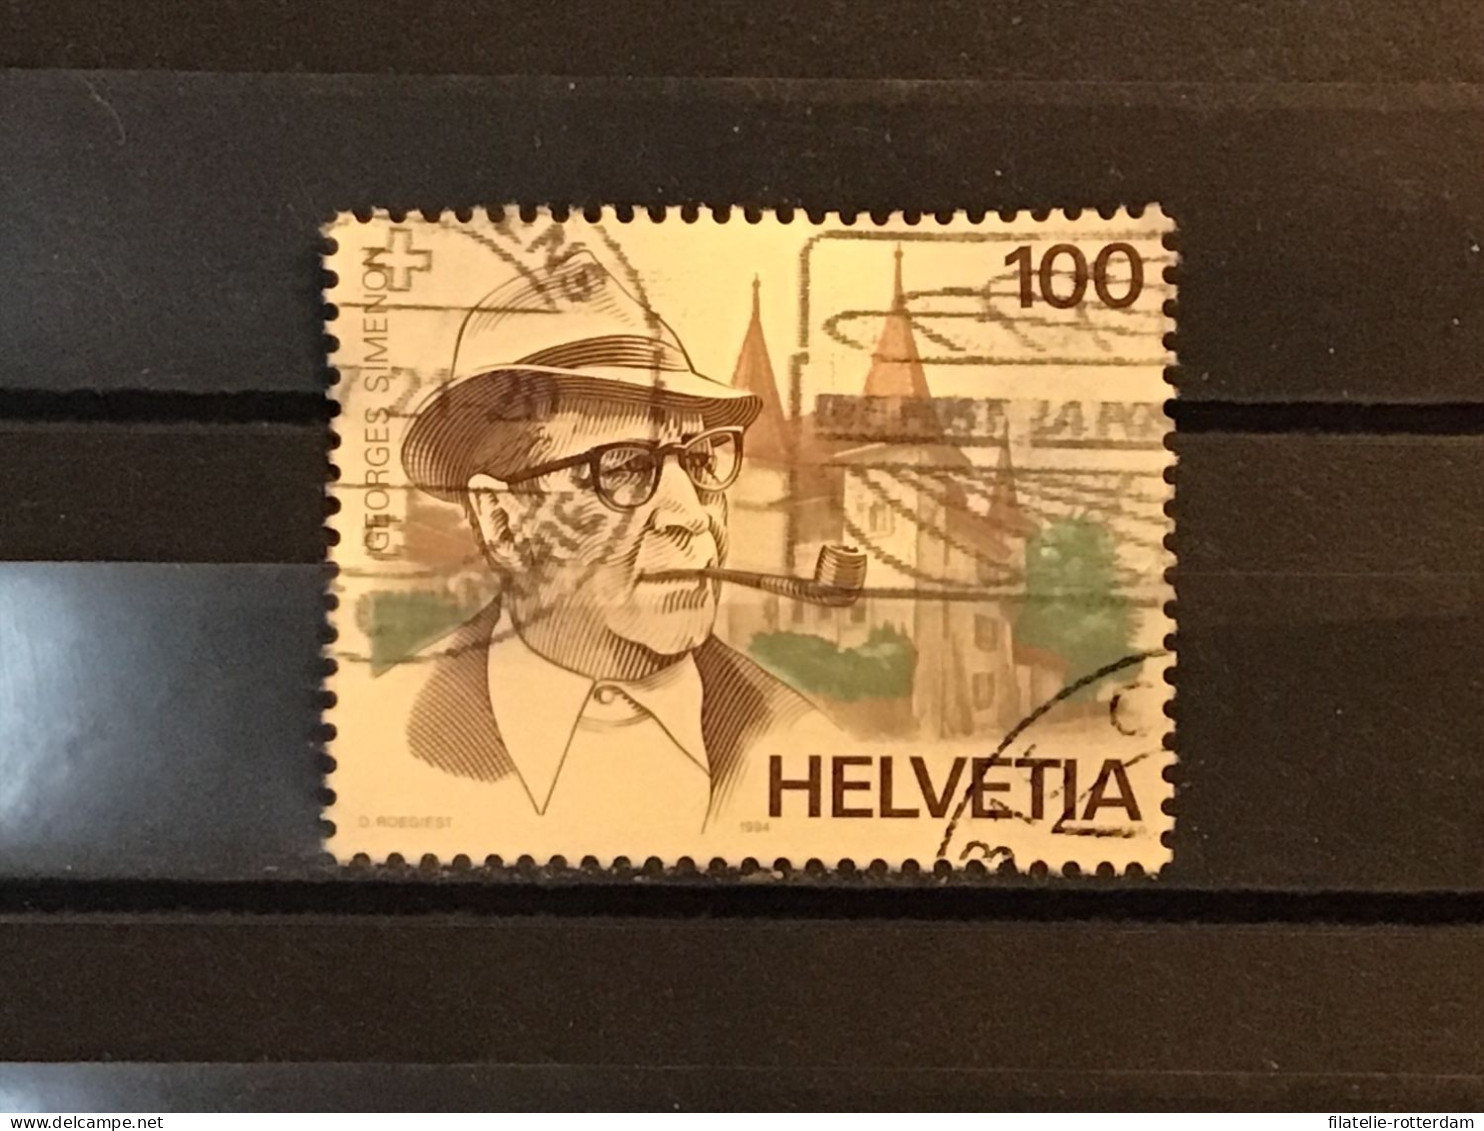 Switzerland / Zwitserland - Georges Simenon (100) 1994 - Used Stamps